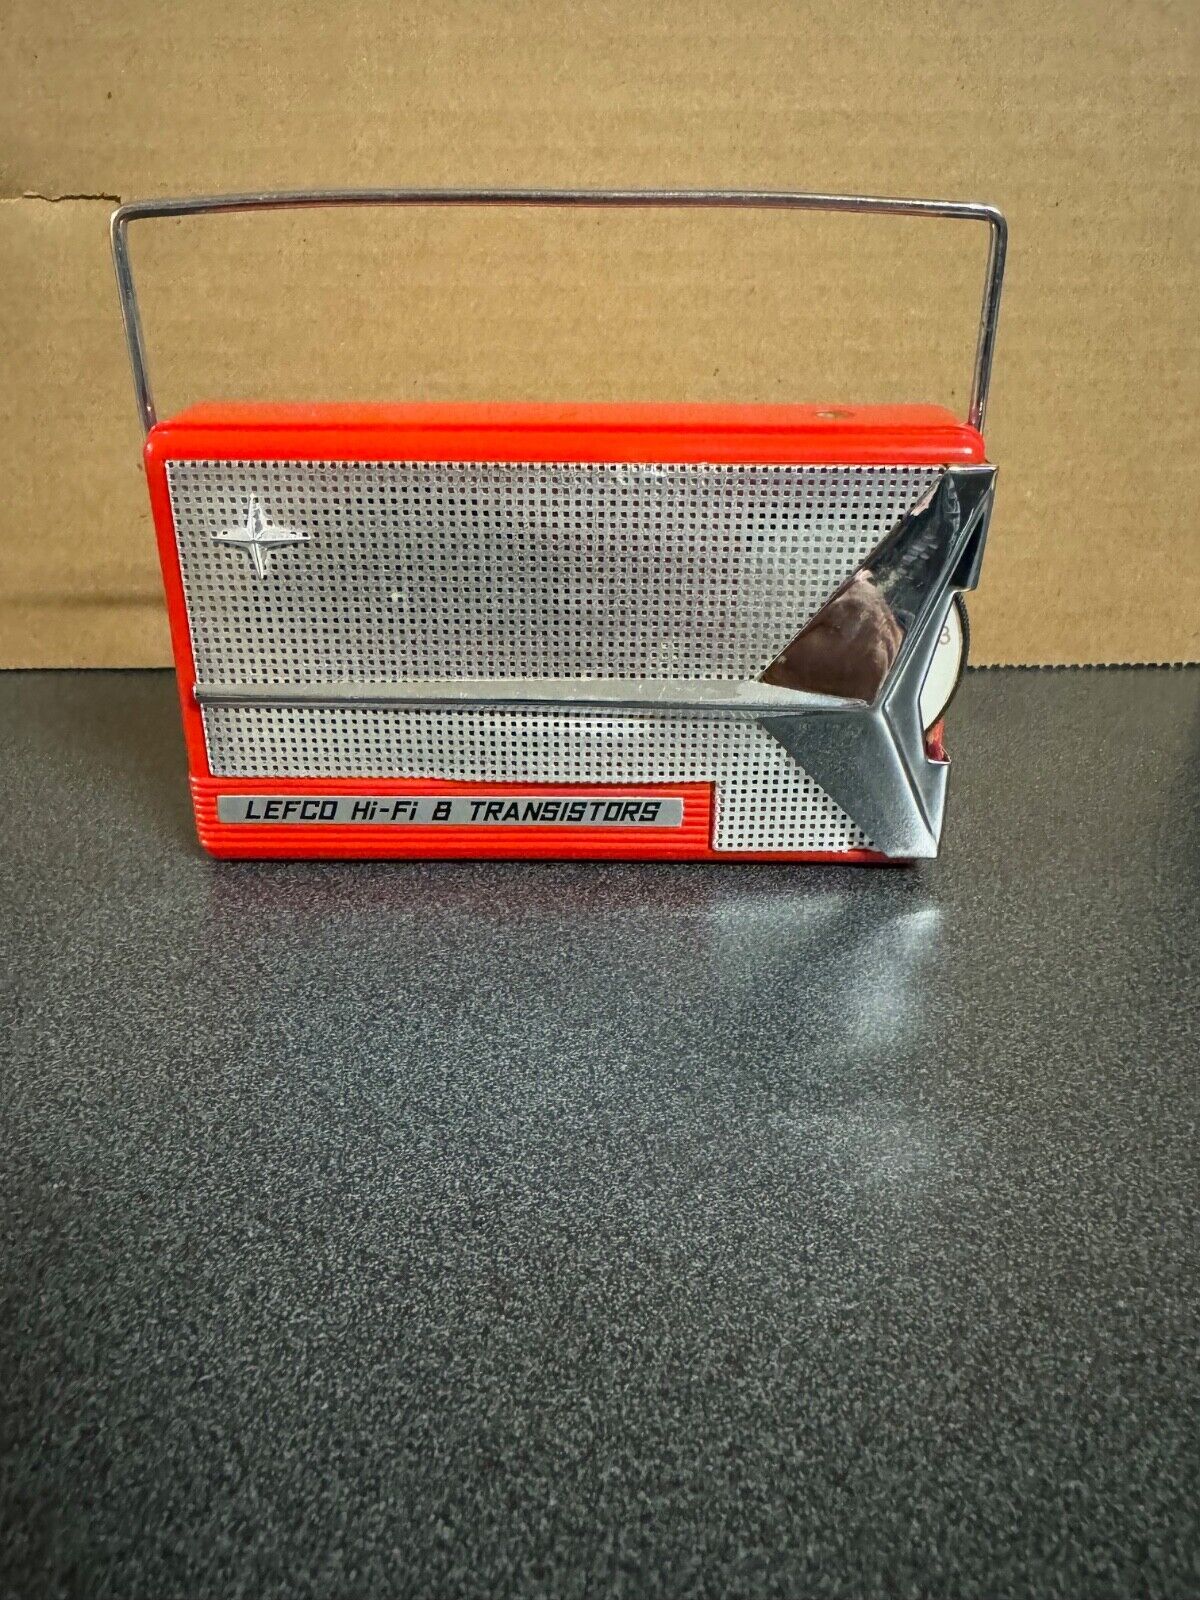 Lefco HI-Fi 8 Transistor Radio